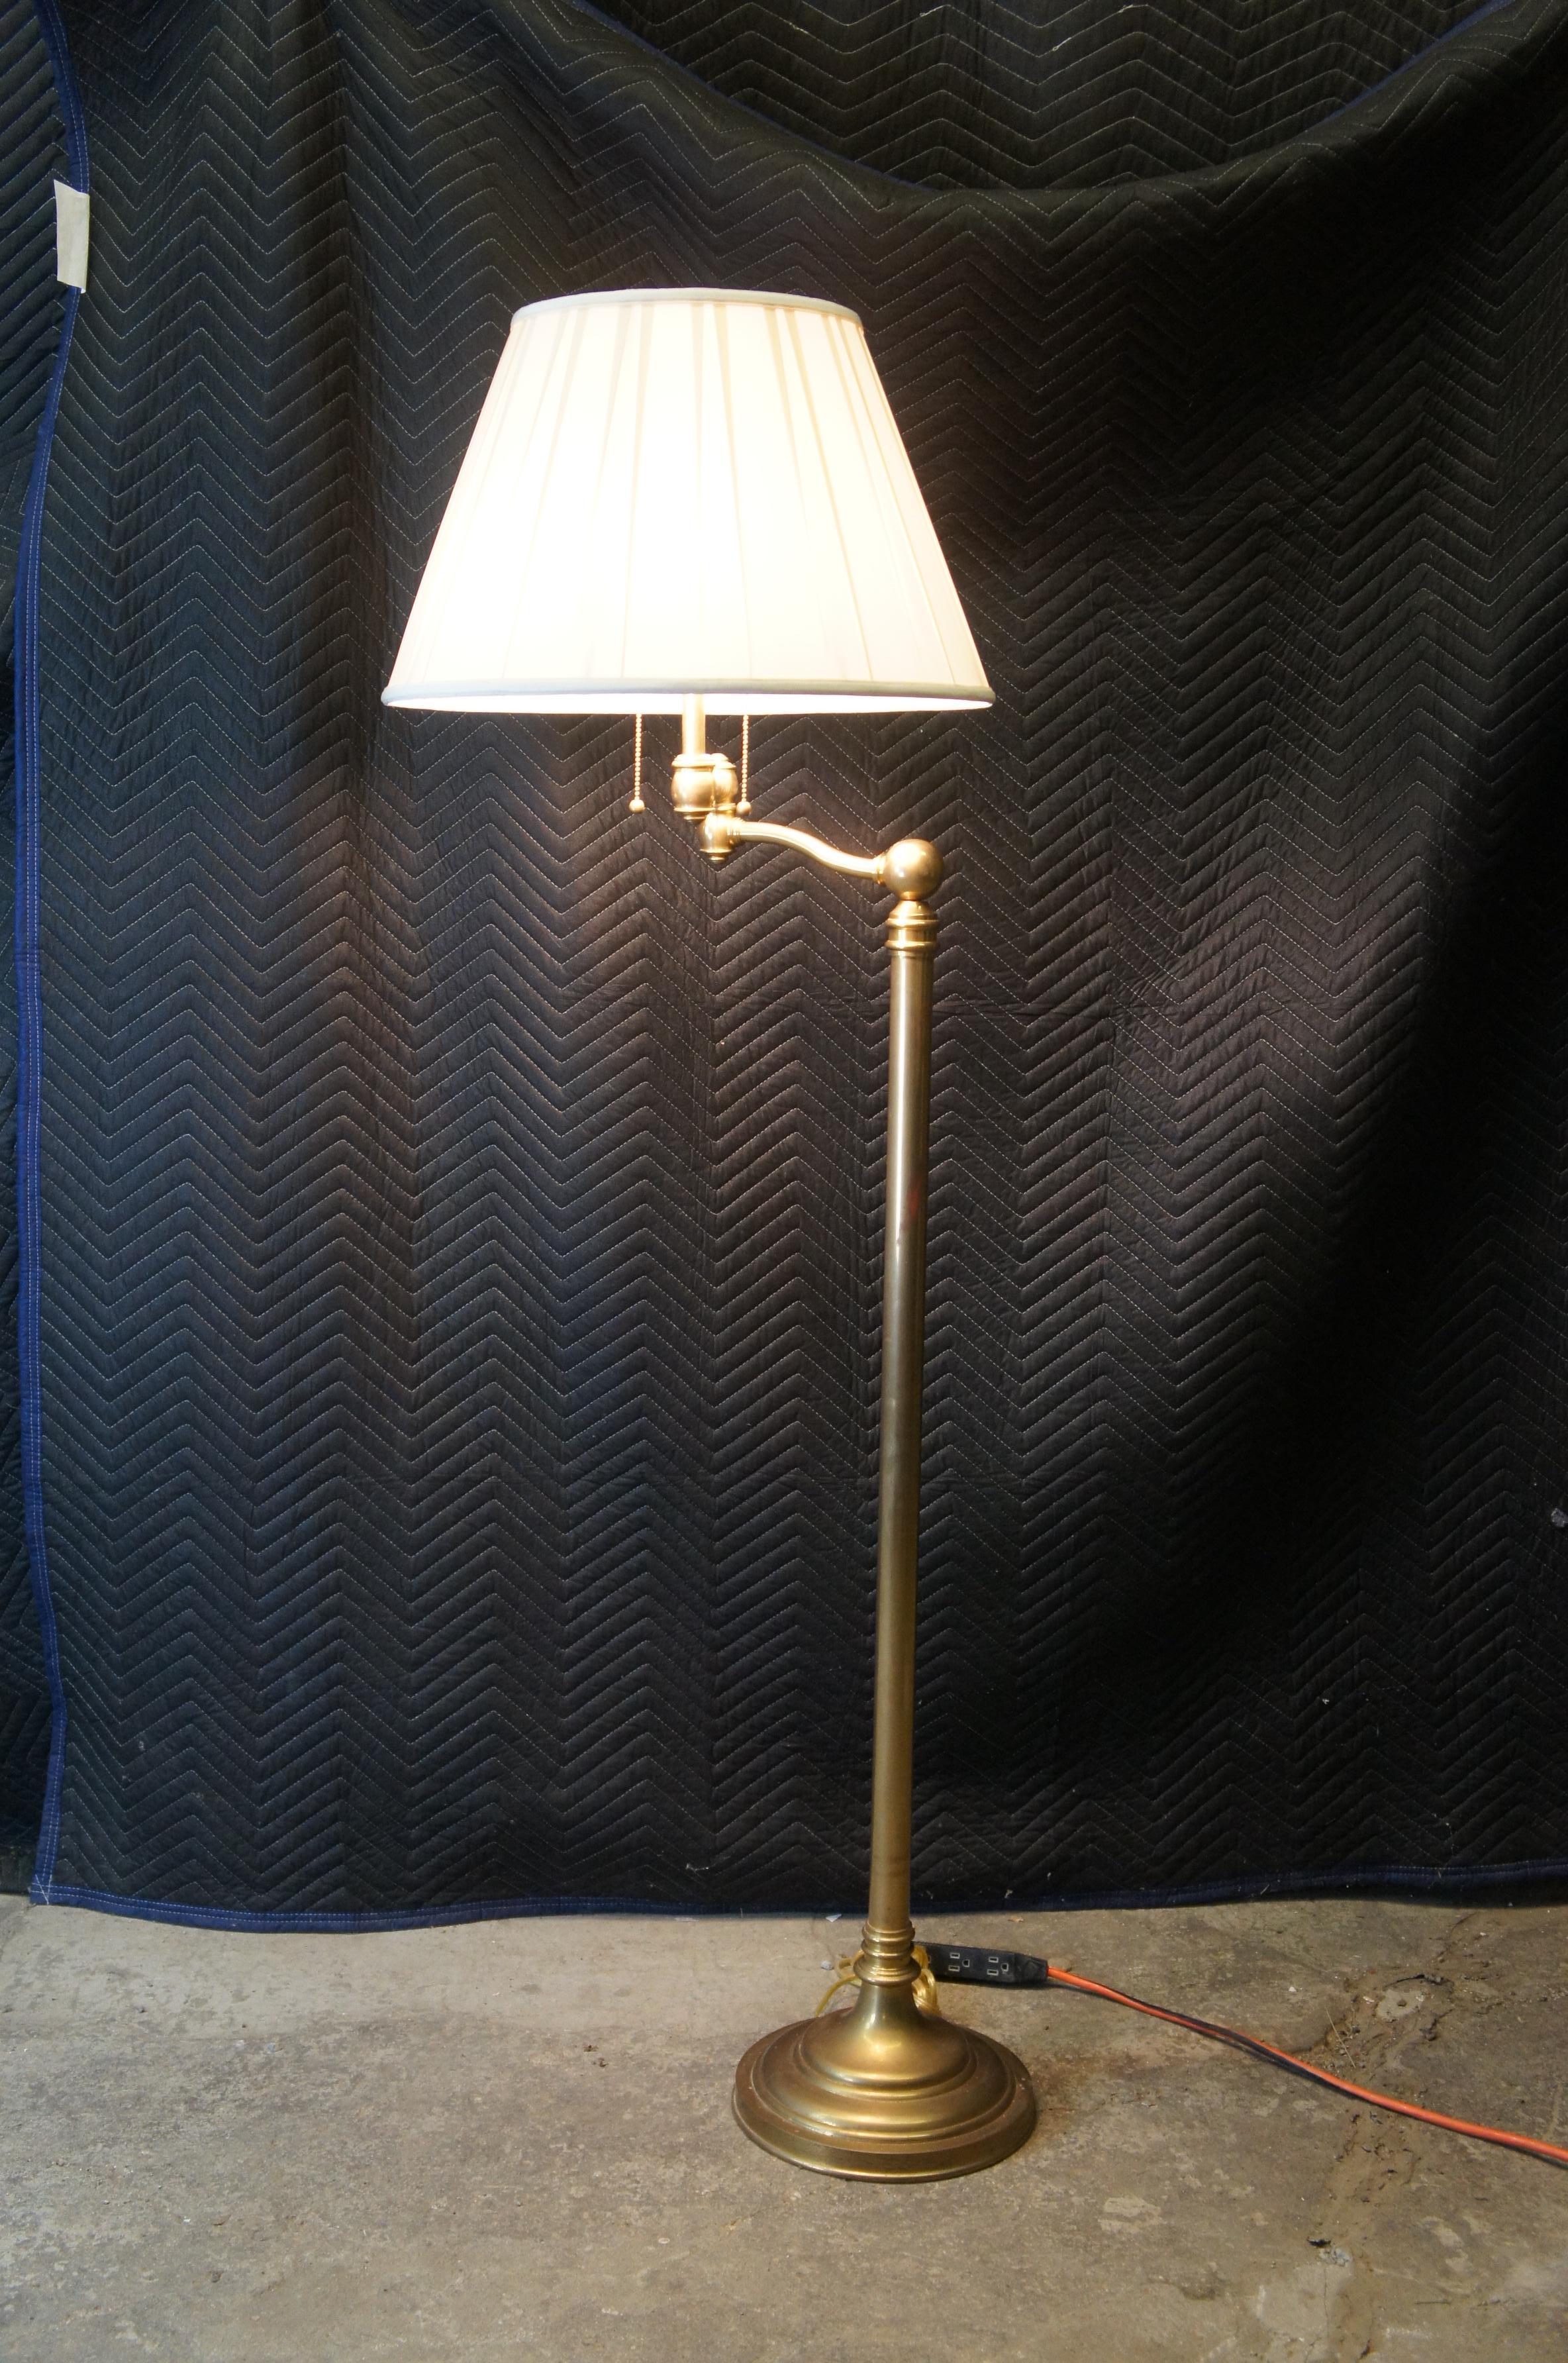 2 Ralph Lauren Antique Brass Sargent Swing Arm Floor Lamps Reading Light Pair For Sale 8